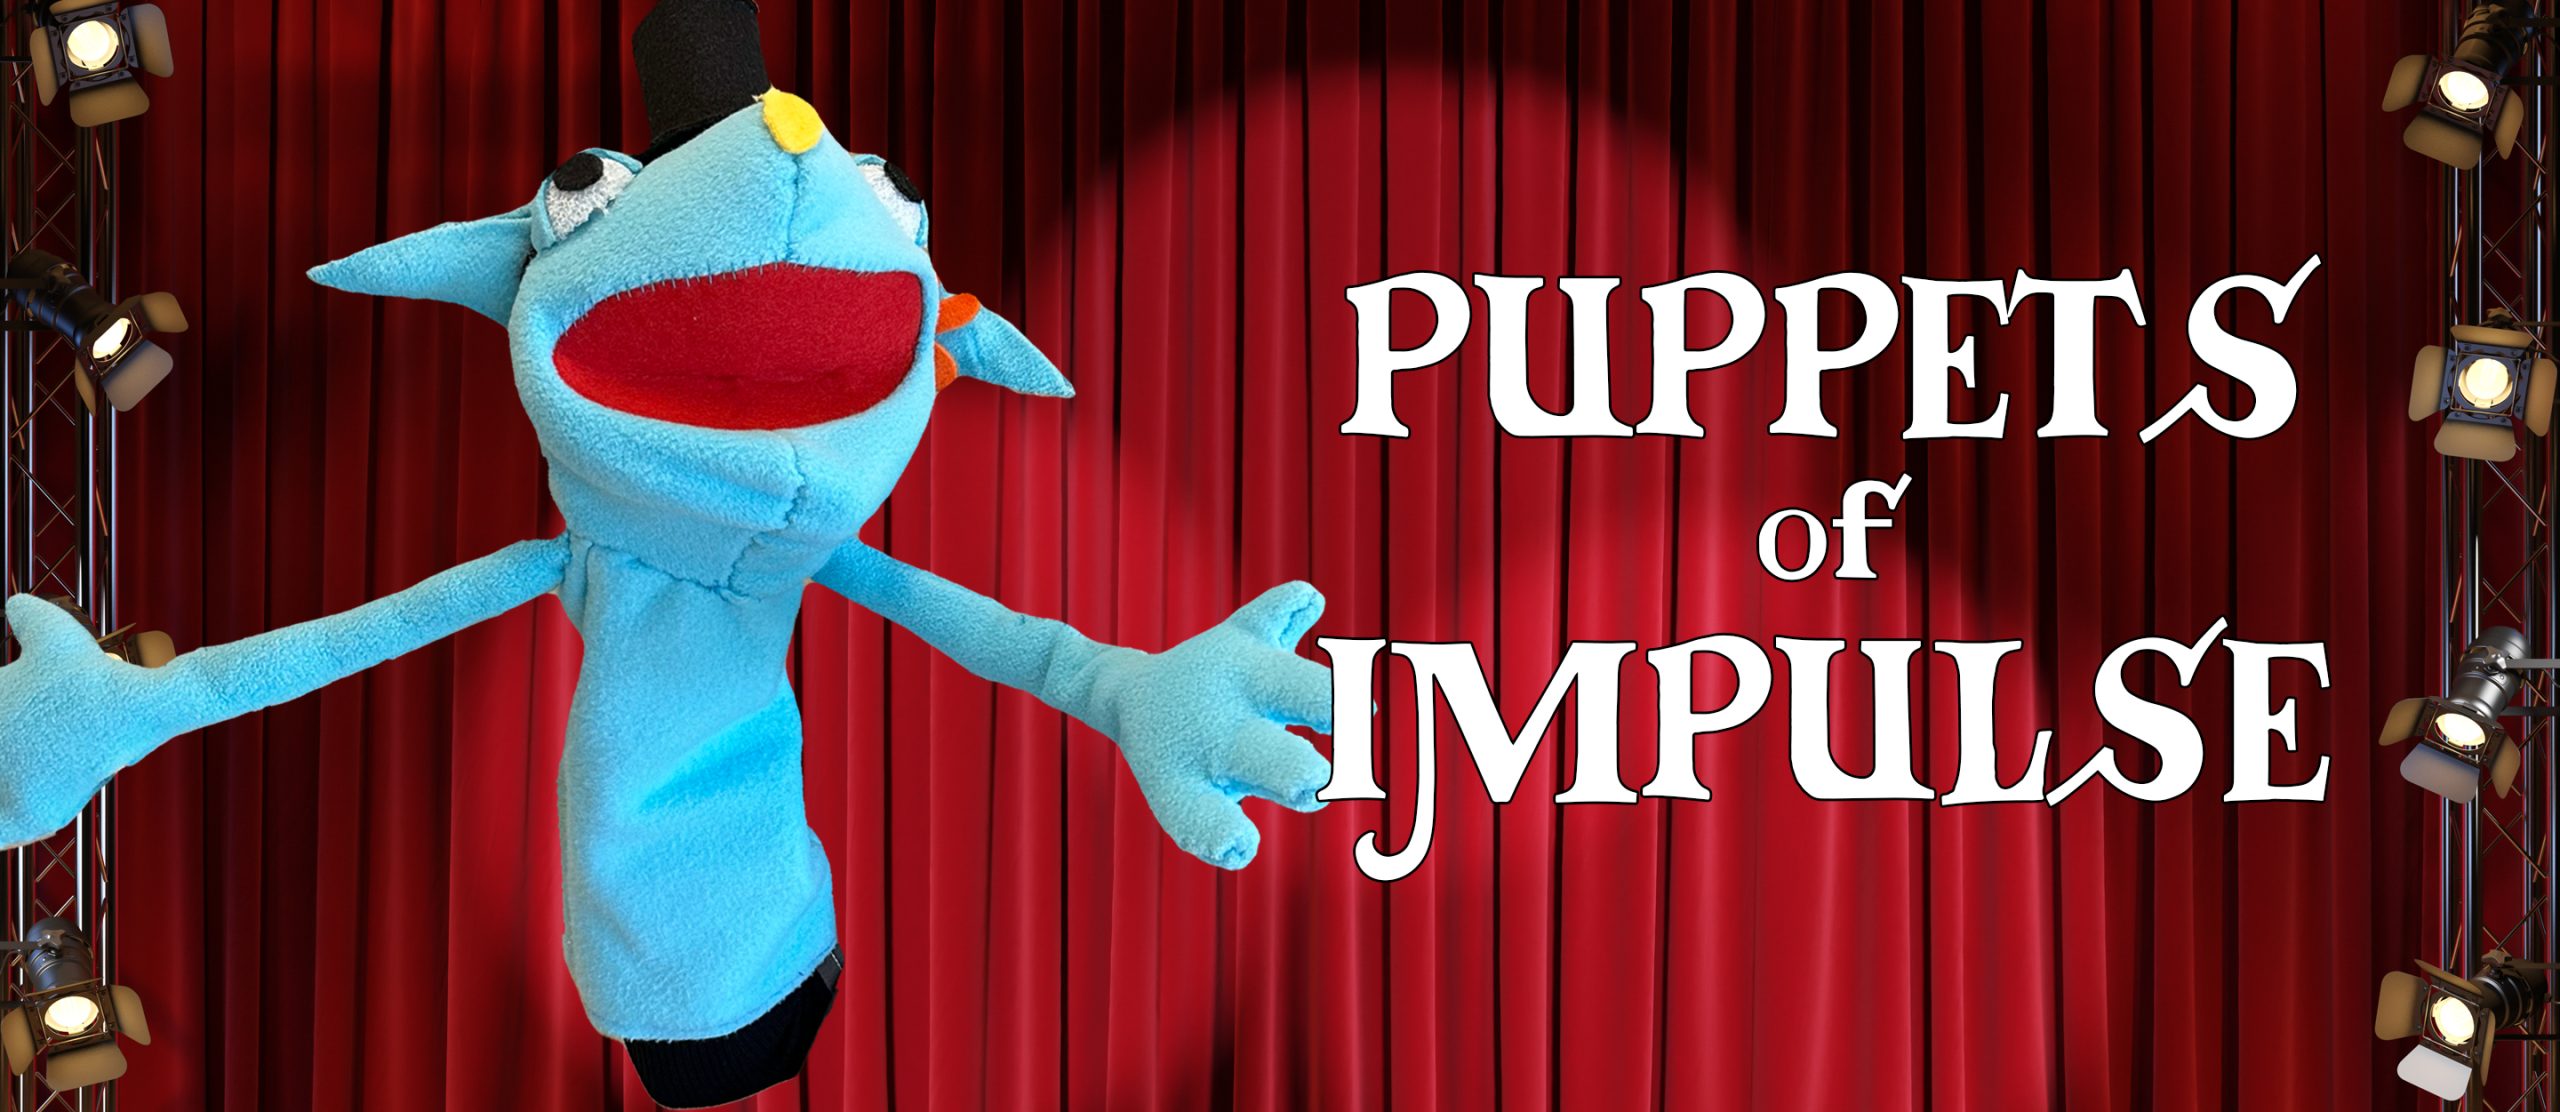 Puppets of Impulse